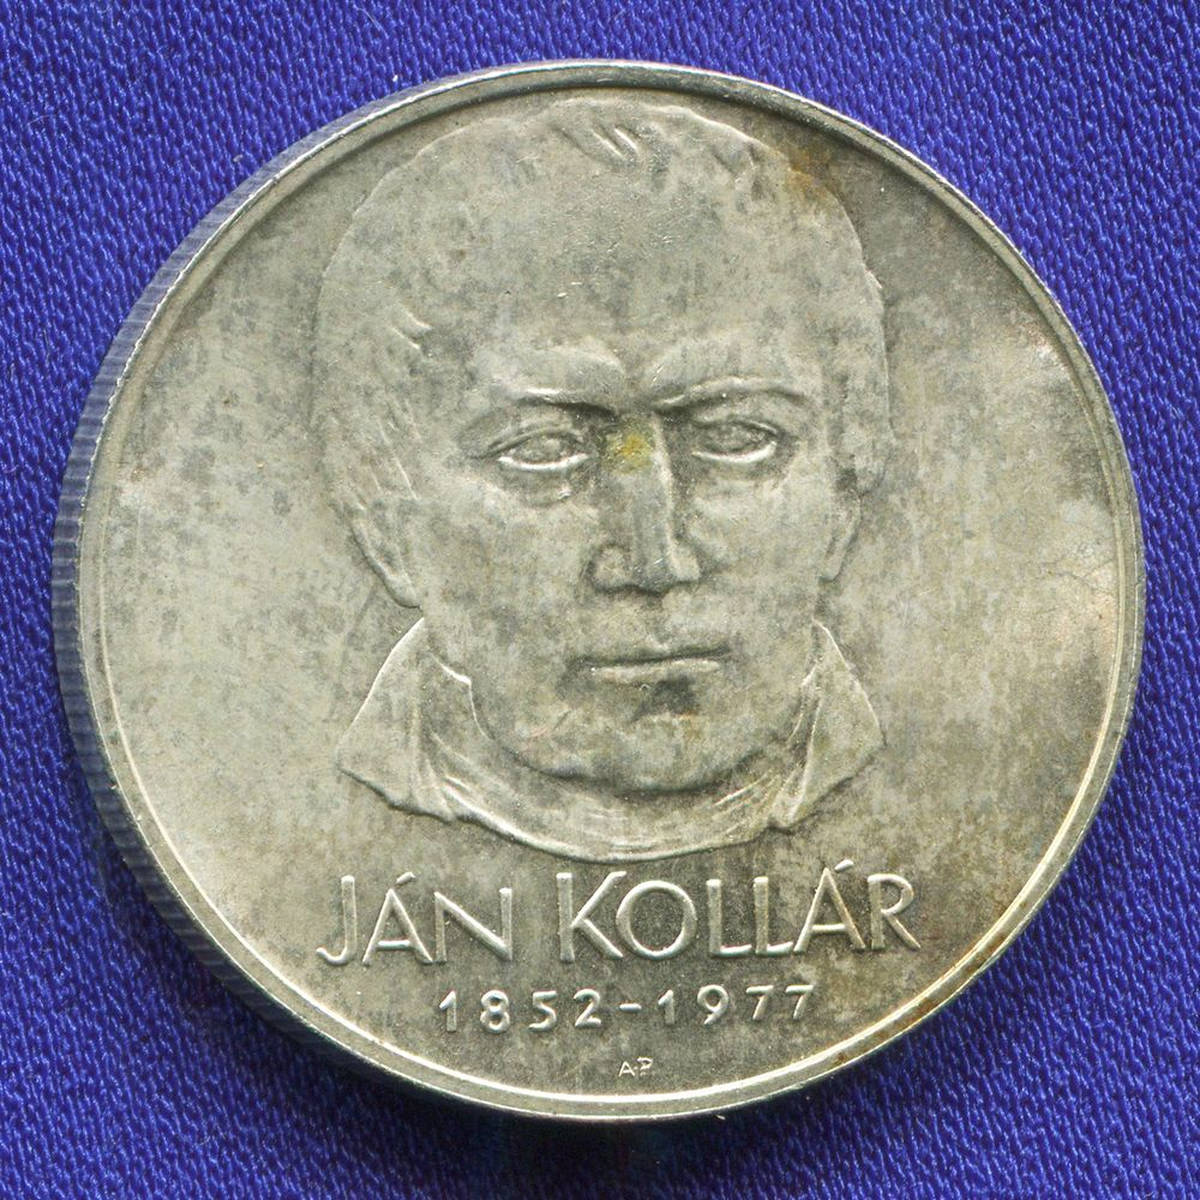 Чехословакия 50 крон 1977 aUNC Ян Коллар  - 10396